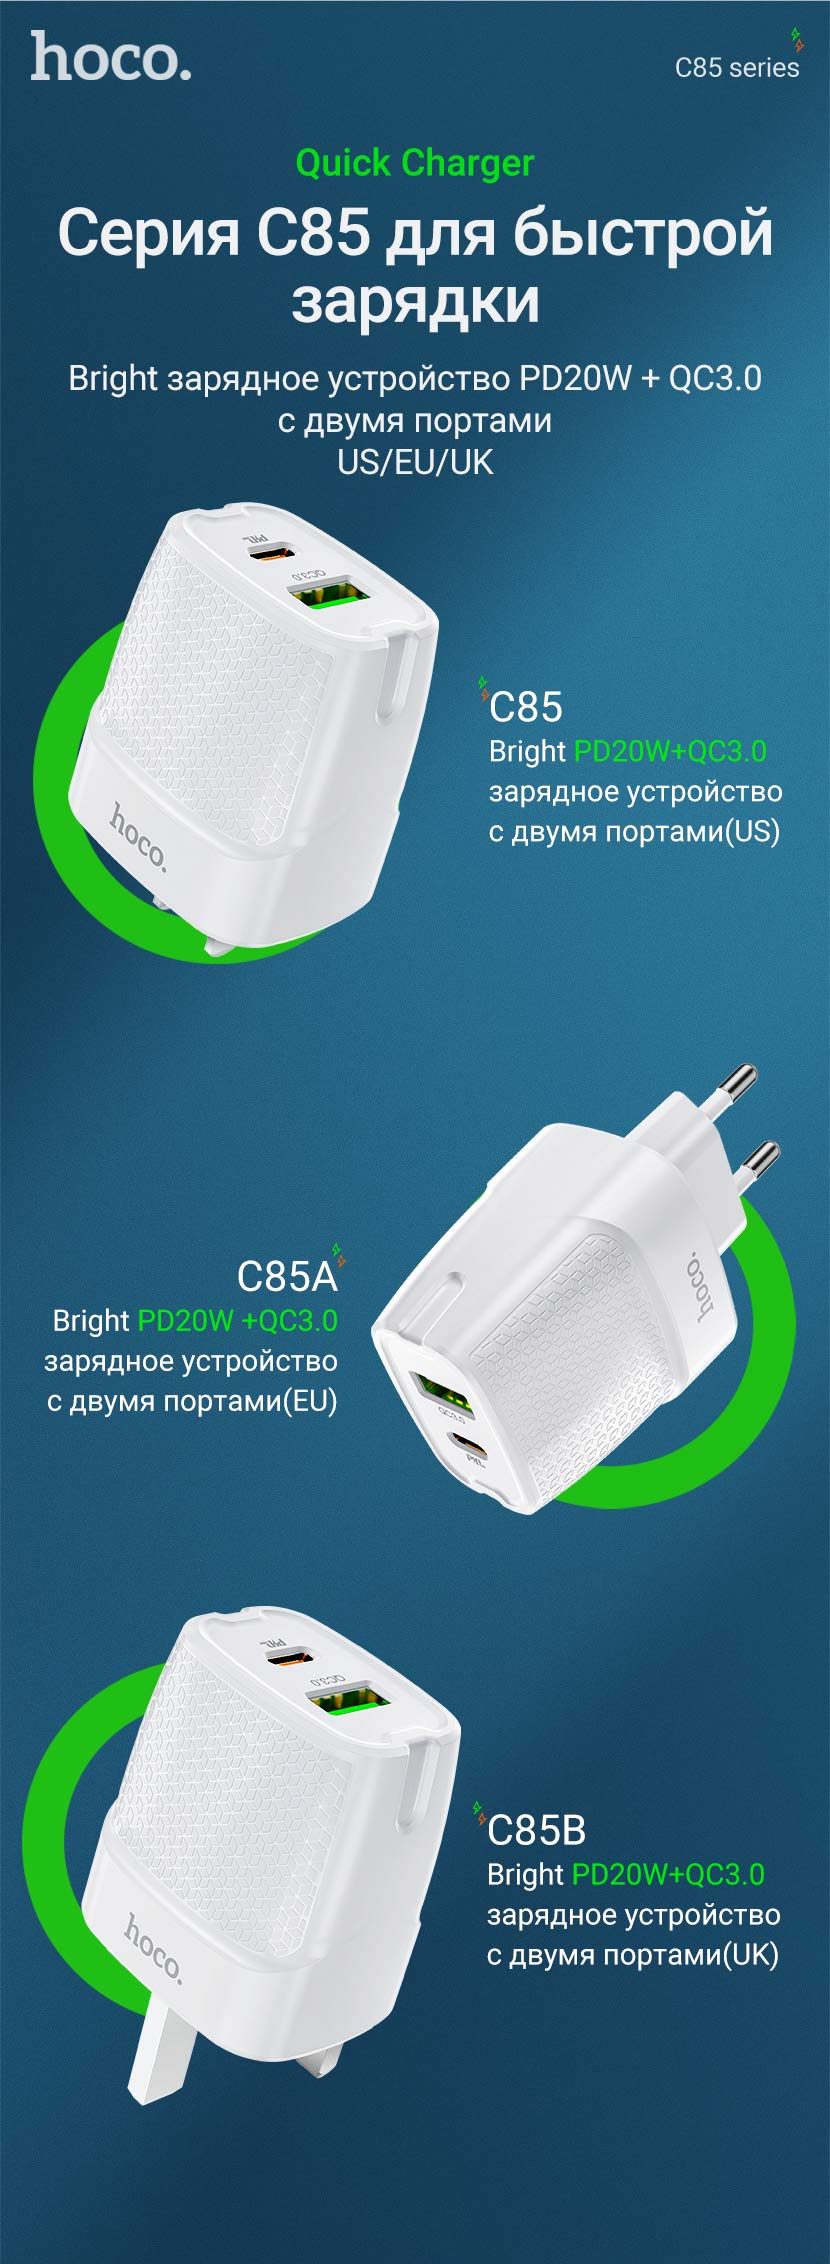 hoco news c85 bright dual port pd20w qc3 wall charger plugs ru